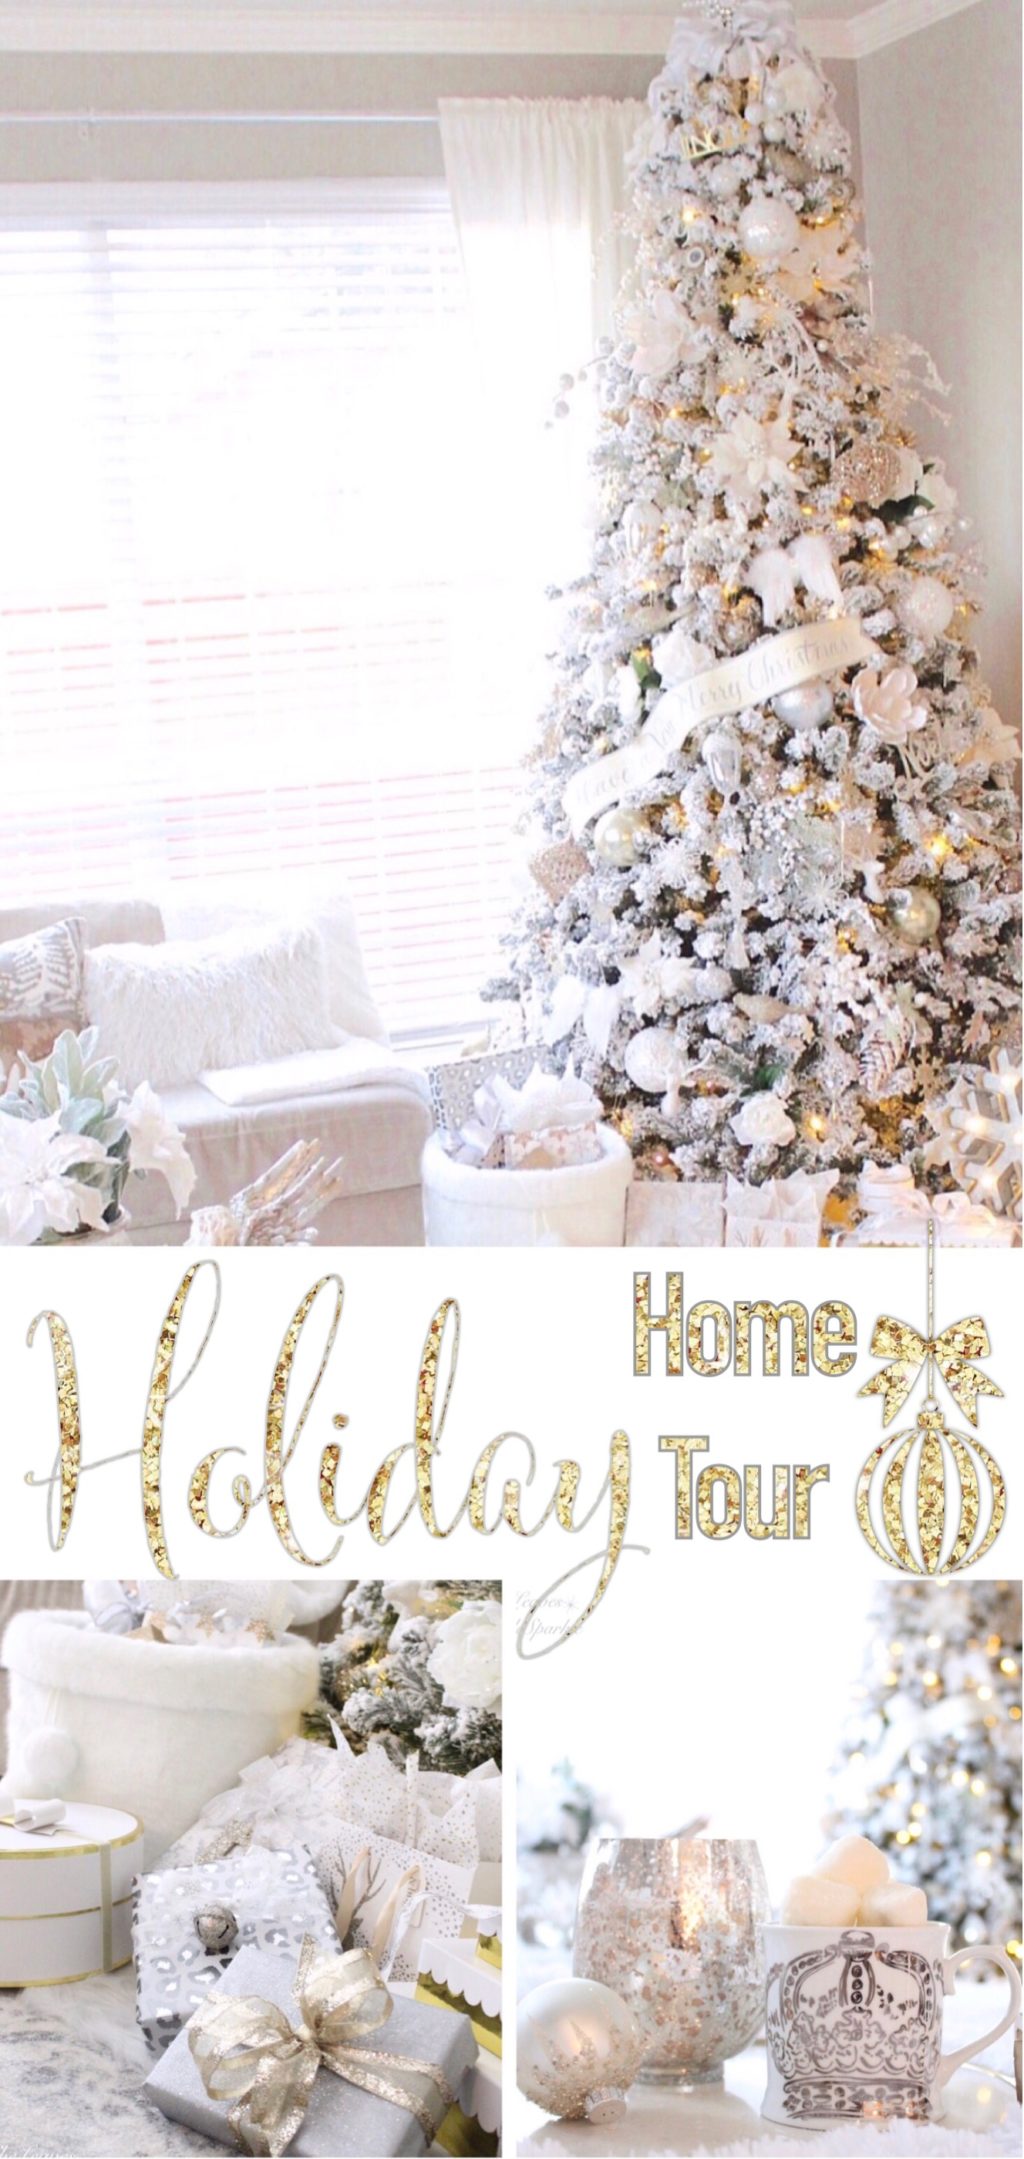 Home For the holidays blog tour 2016